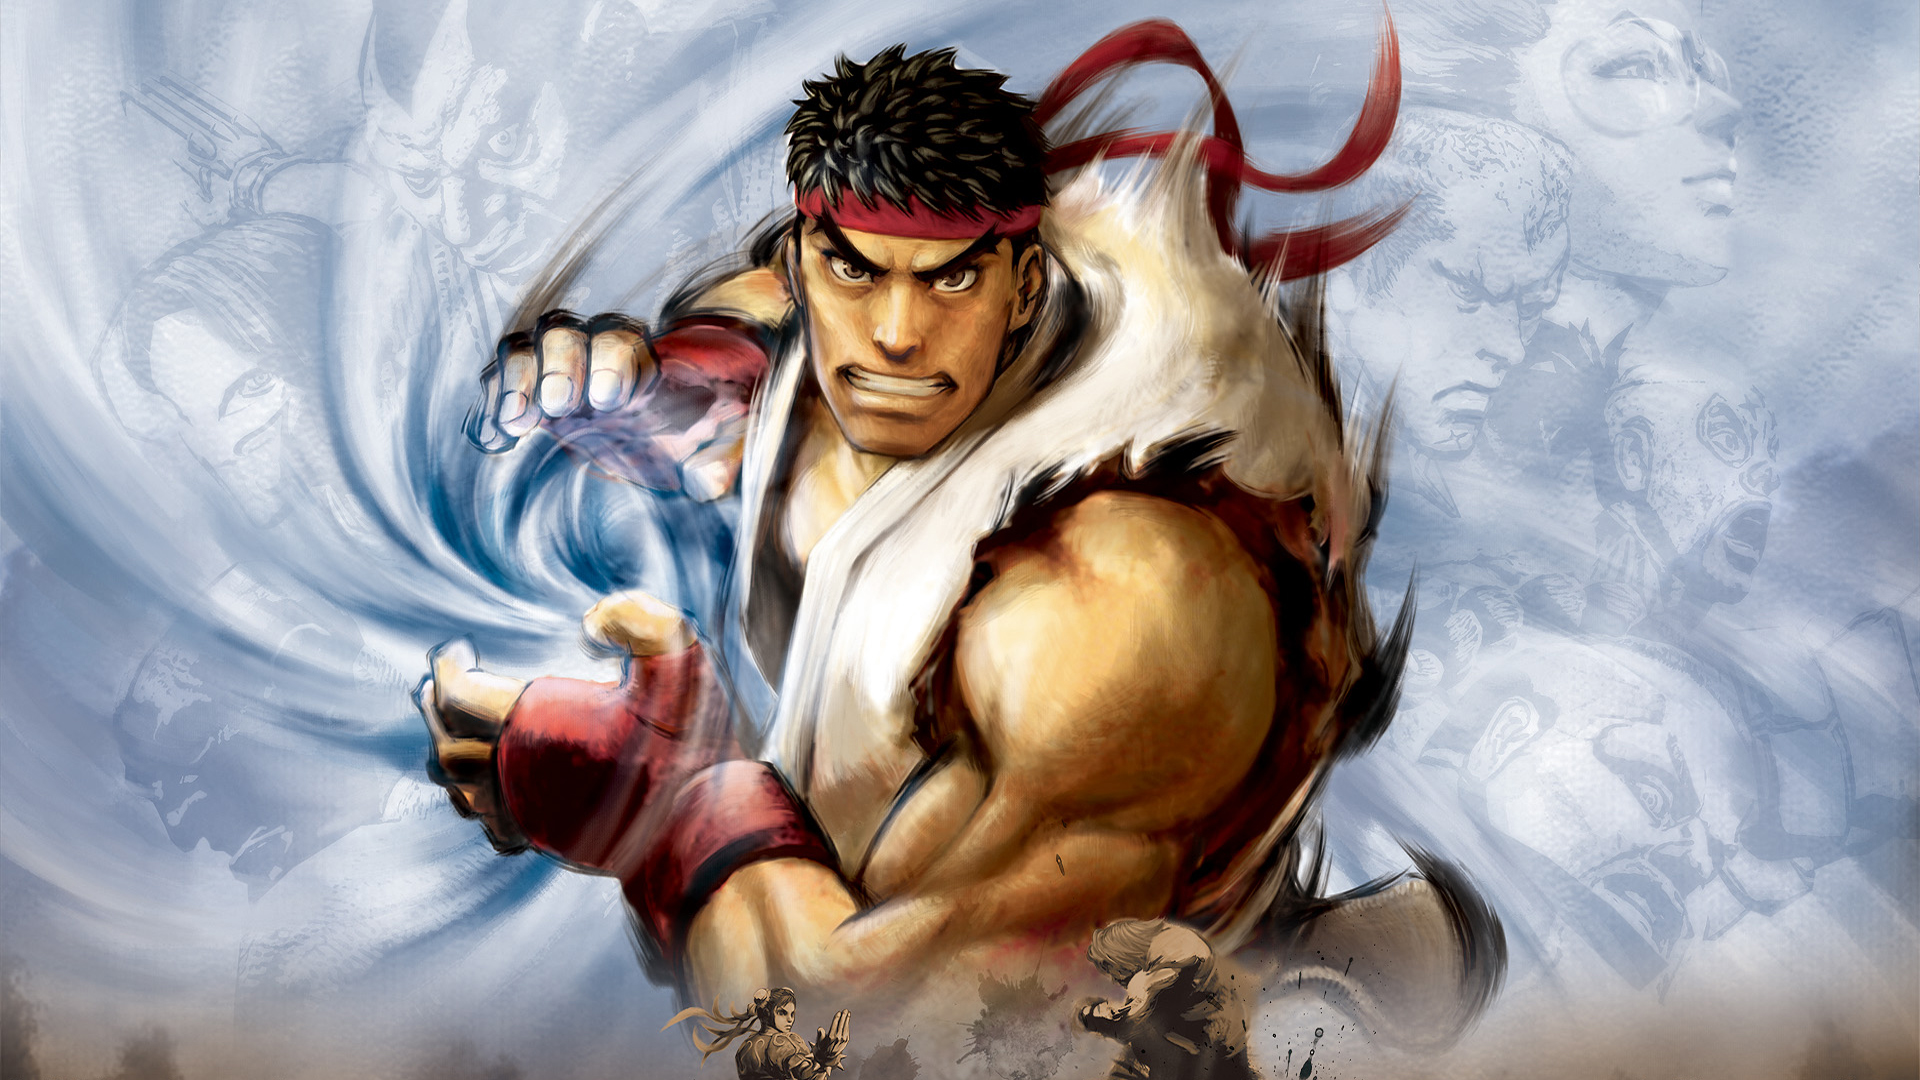 HD Wallpaper Video Games Ryu Street Fighter Iv Fresh New